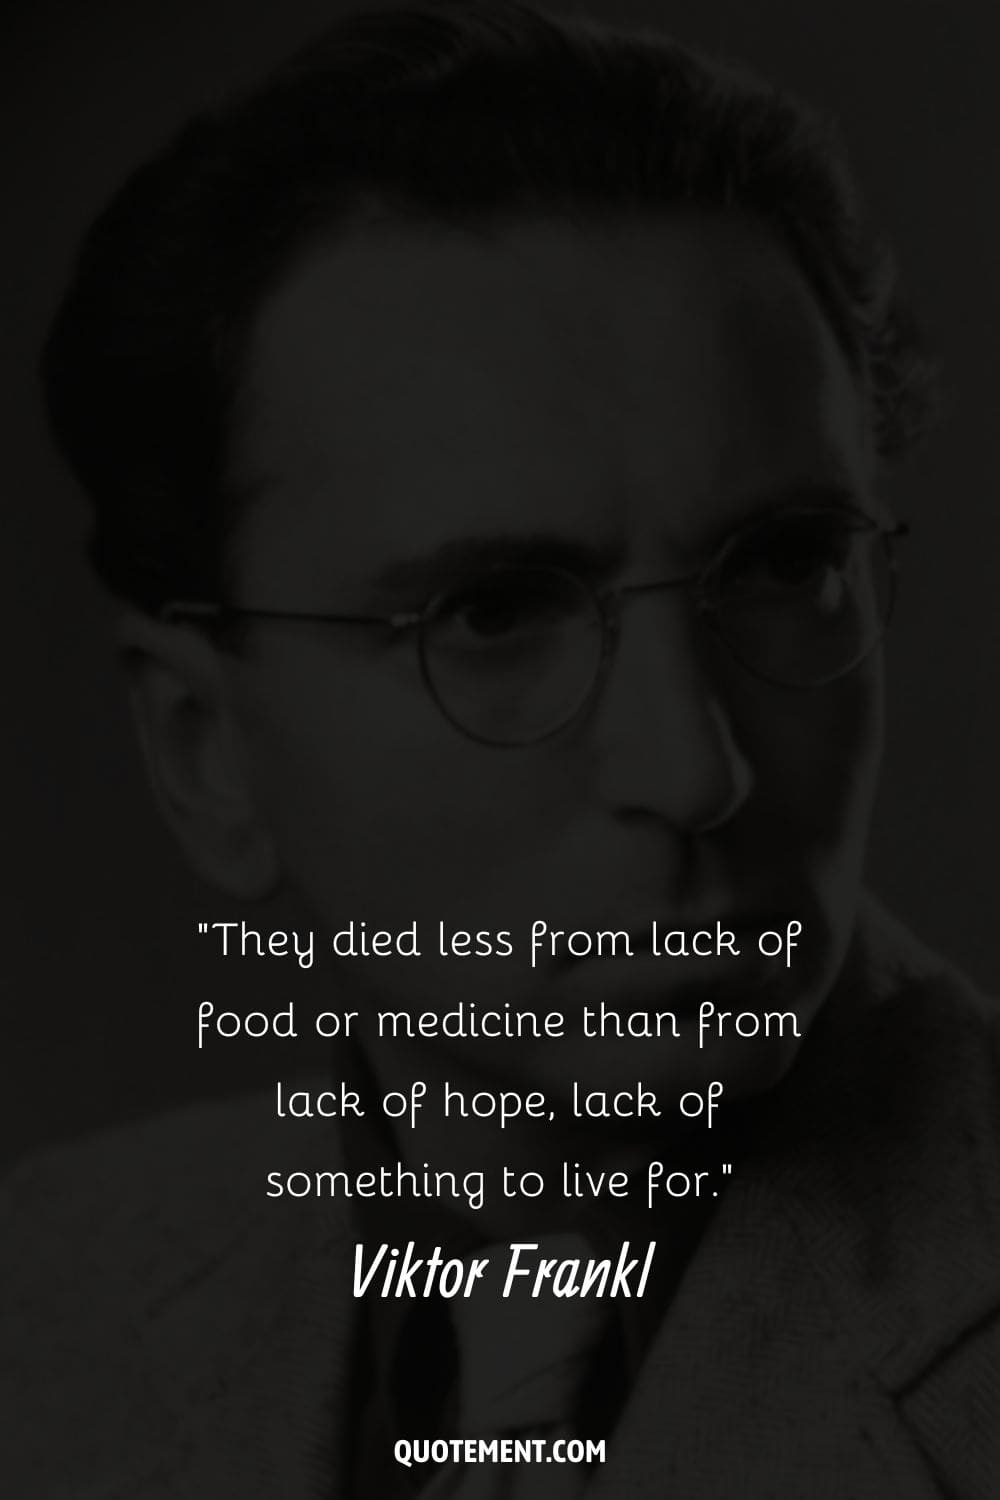 Imagen de Viktor Frankl que representa su cita sobre la esperanza.